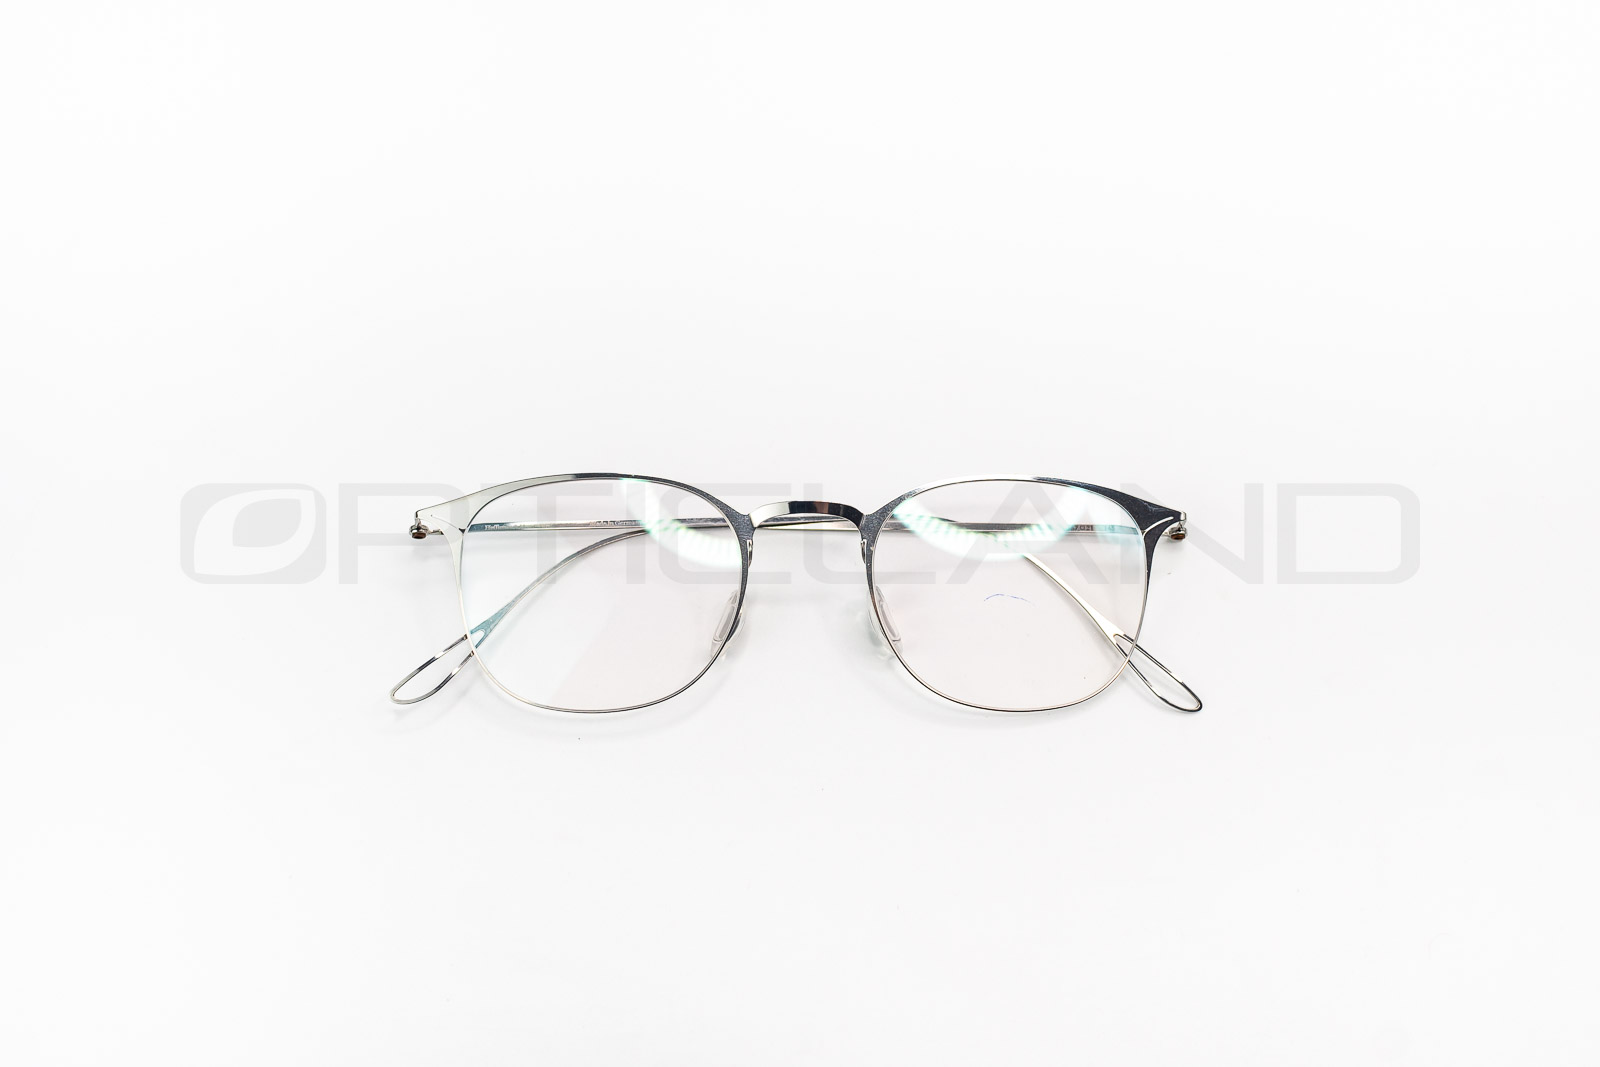 Haffmans & Neumeister BURROWS C001 - eyewear from OPTICLAND